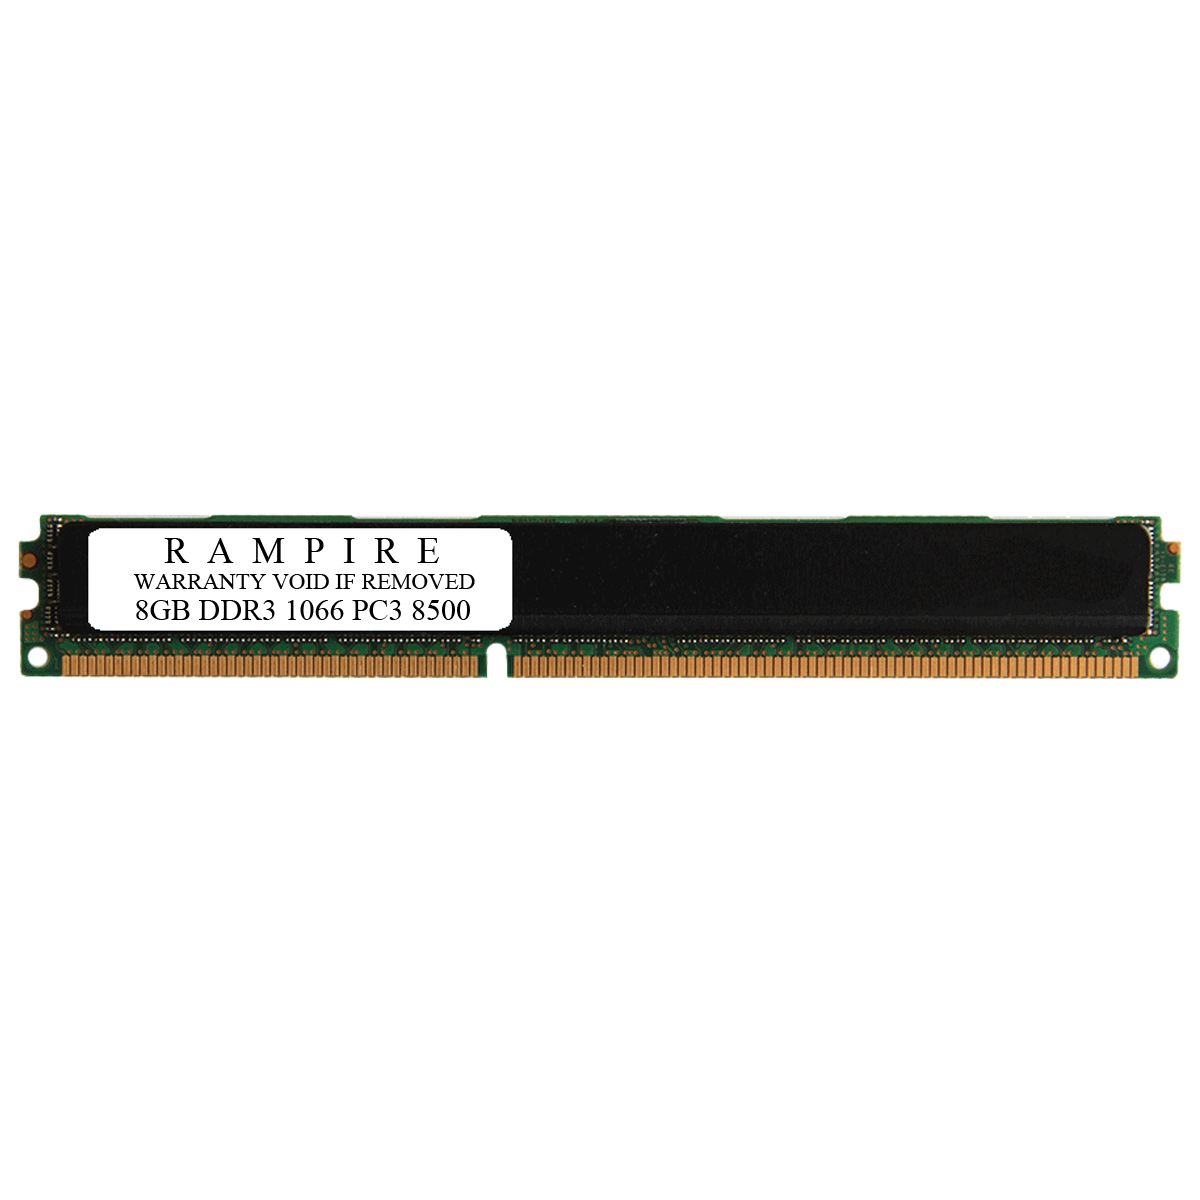 RAMPIRE 8GB DDR3 1066 (PC3 8500) 240-Pin SDRAM 2Rx4 VLP (Low Profile) 1.5V ECC Registered Server Memory